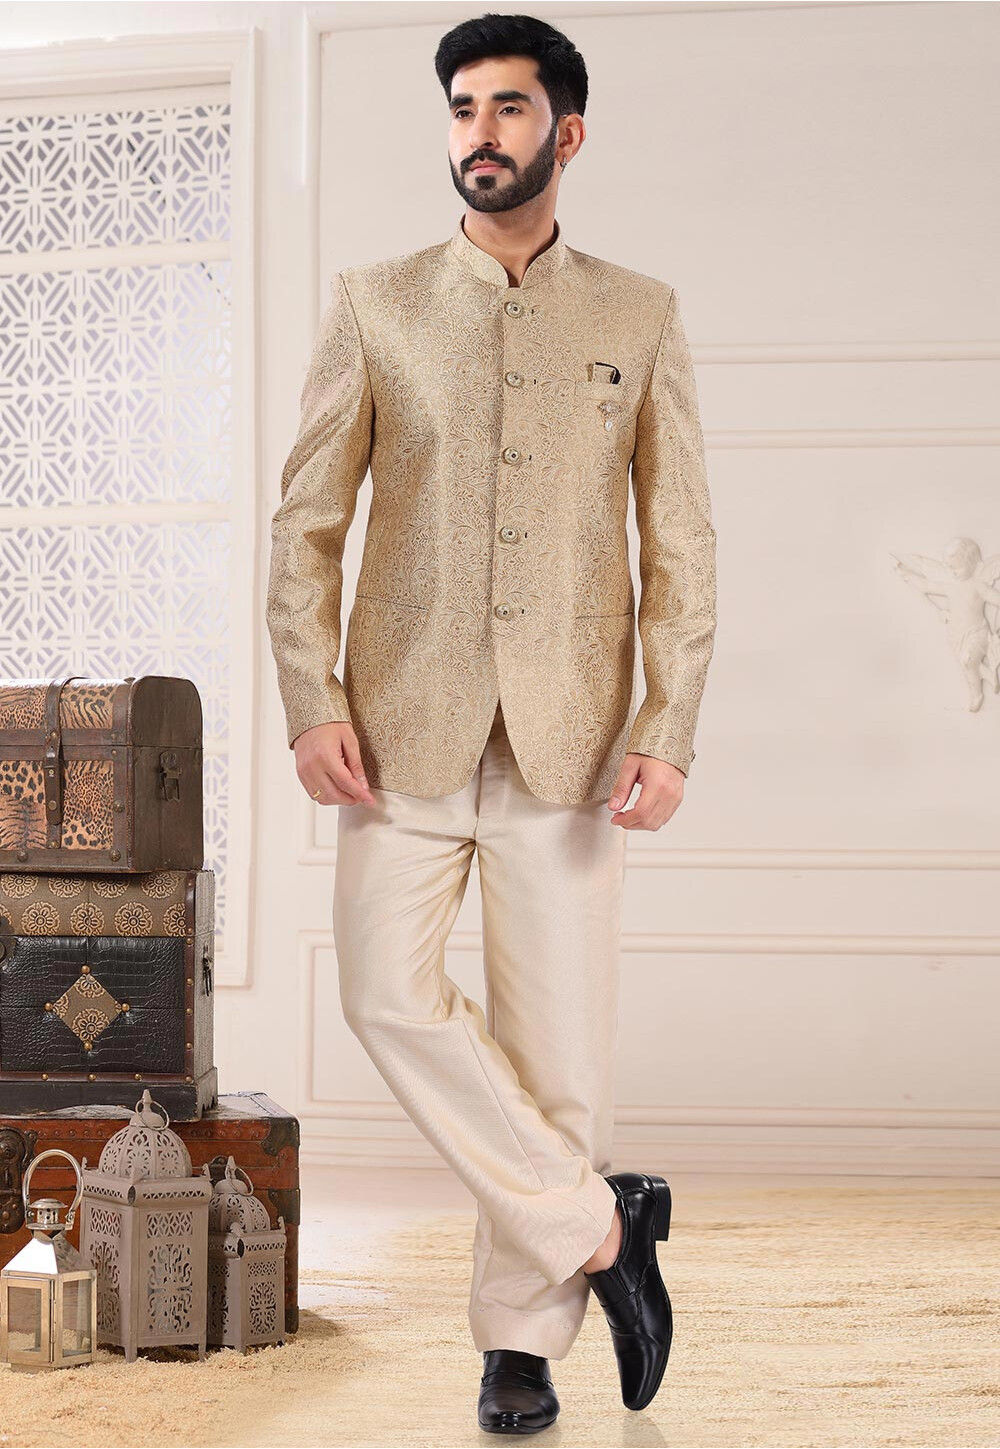 Buy Bandhgala Jodhpuri Suits for Men's - Latest design | The Ethnic Co